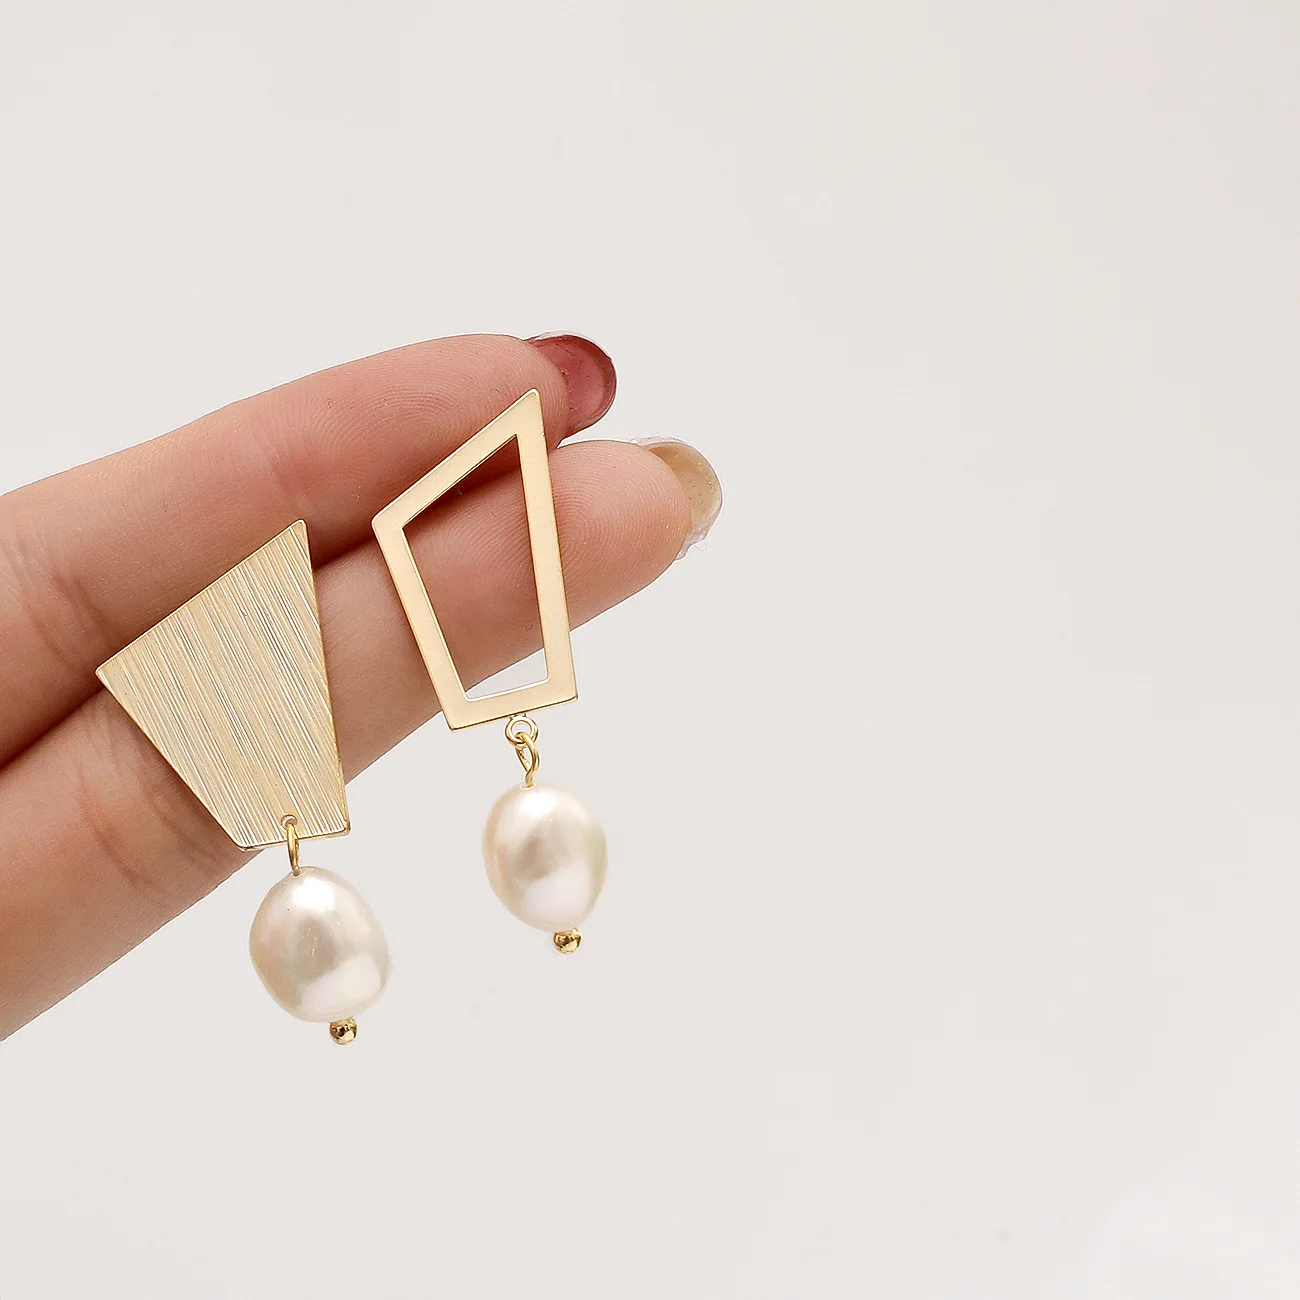 

Duoying OEM aretes vintage geometric stylish earrings jewelry copper elegant charm earrings women pearl gold plated earrings